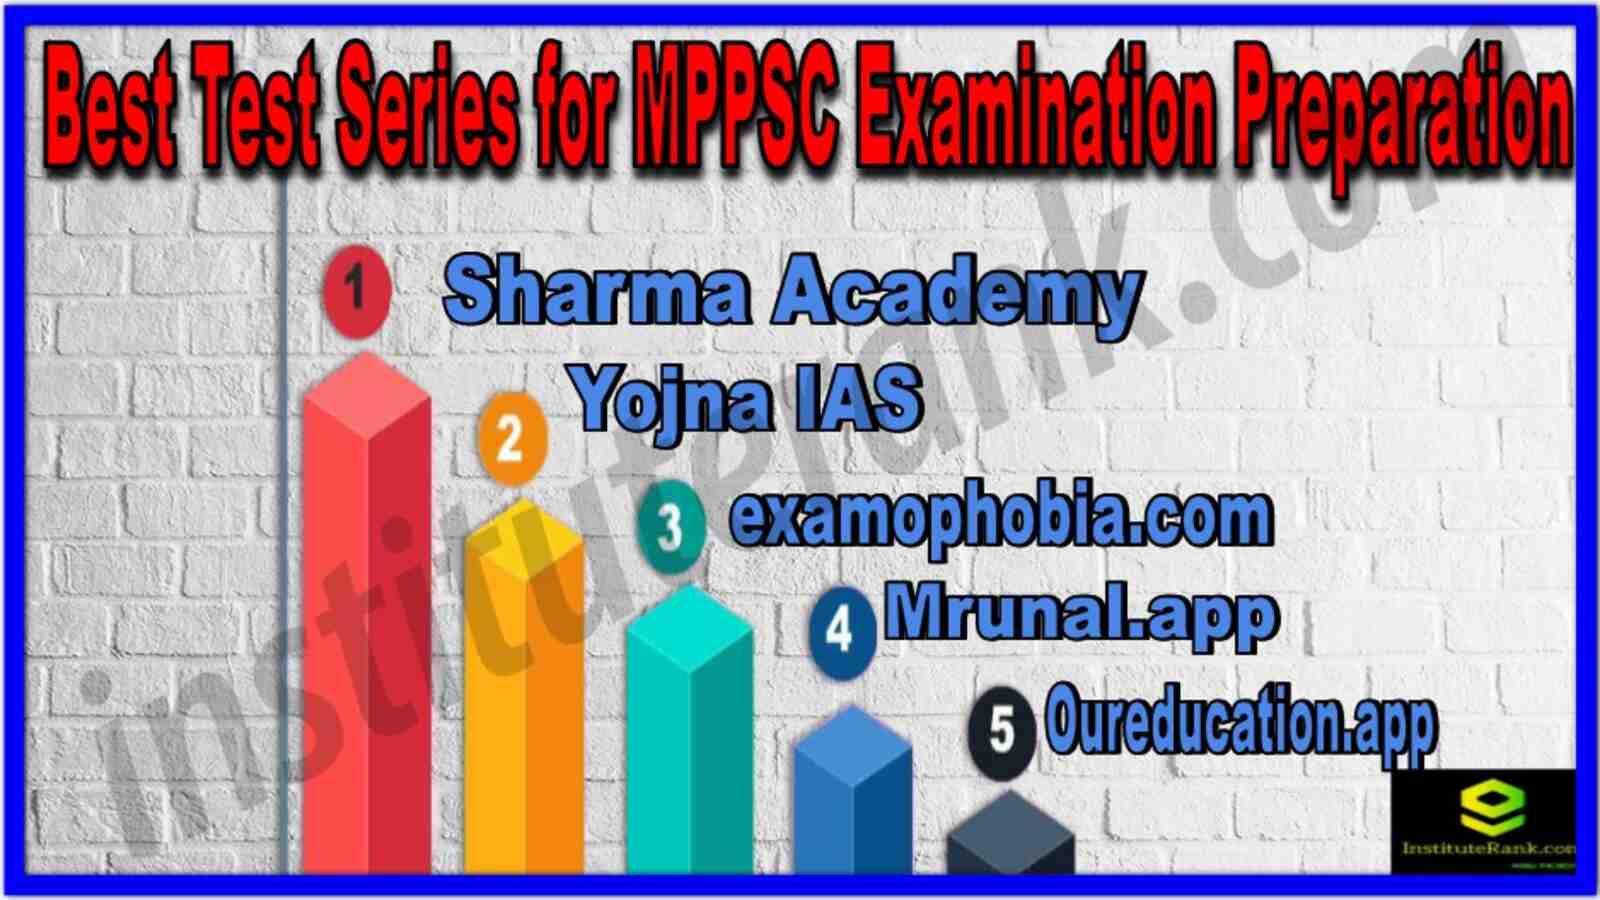 Best Test Series for MPPSC Examination Preparation